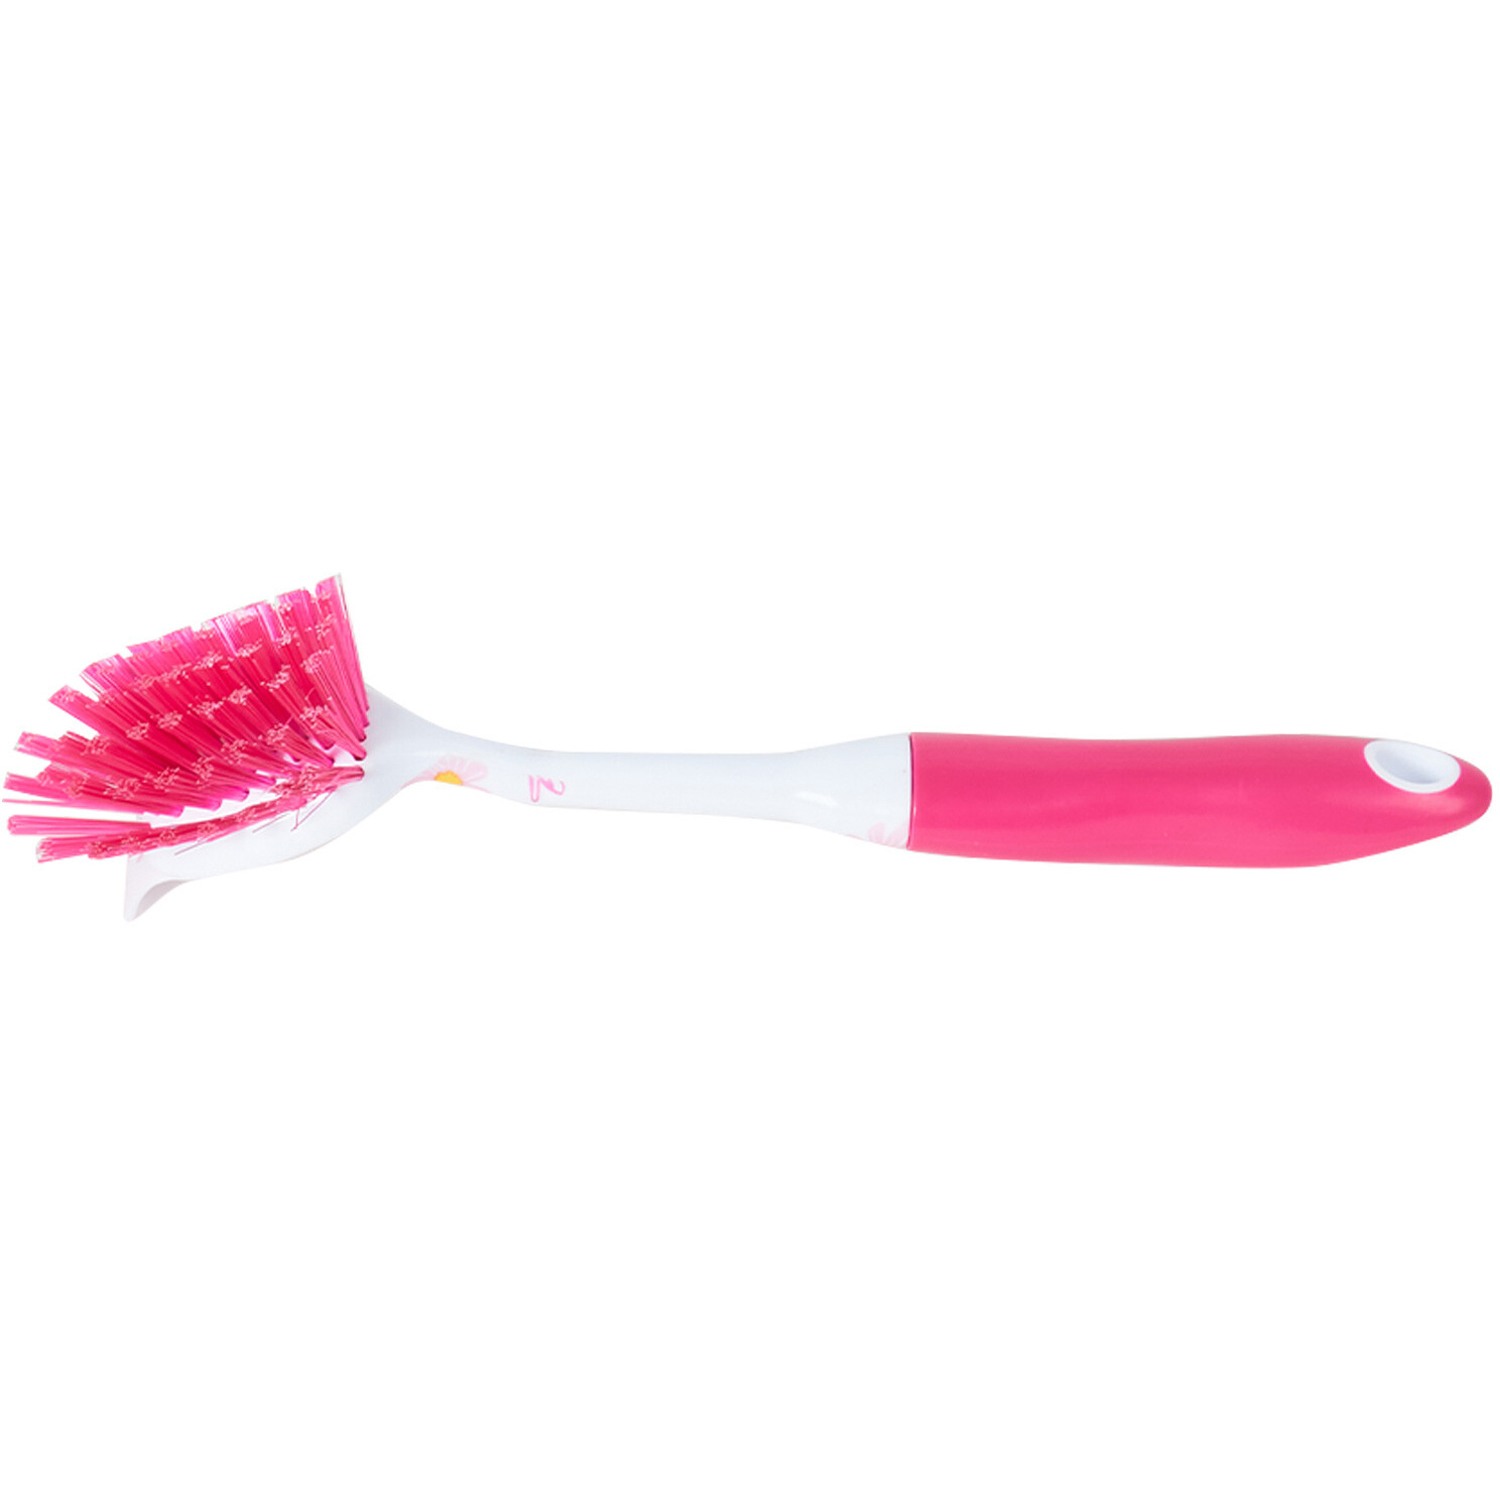 Daisy Pink Dish Brush Image 2